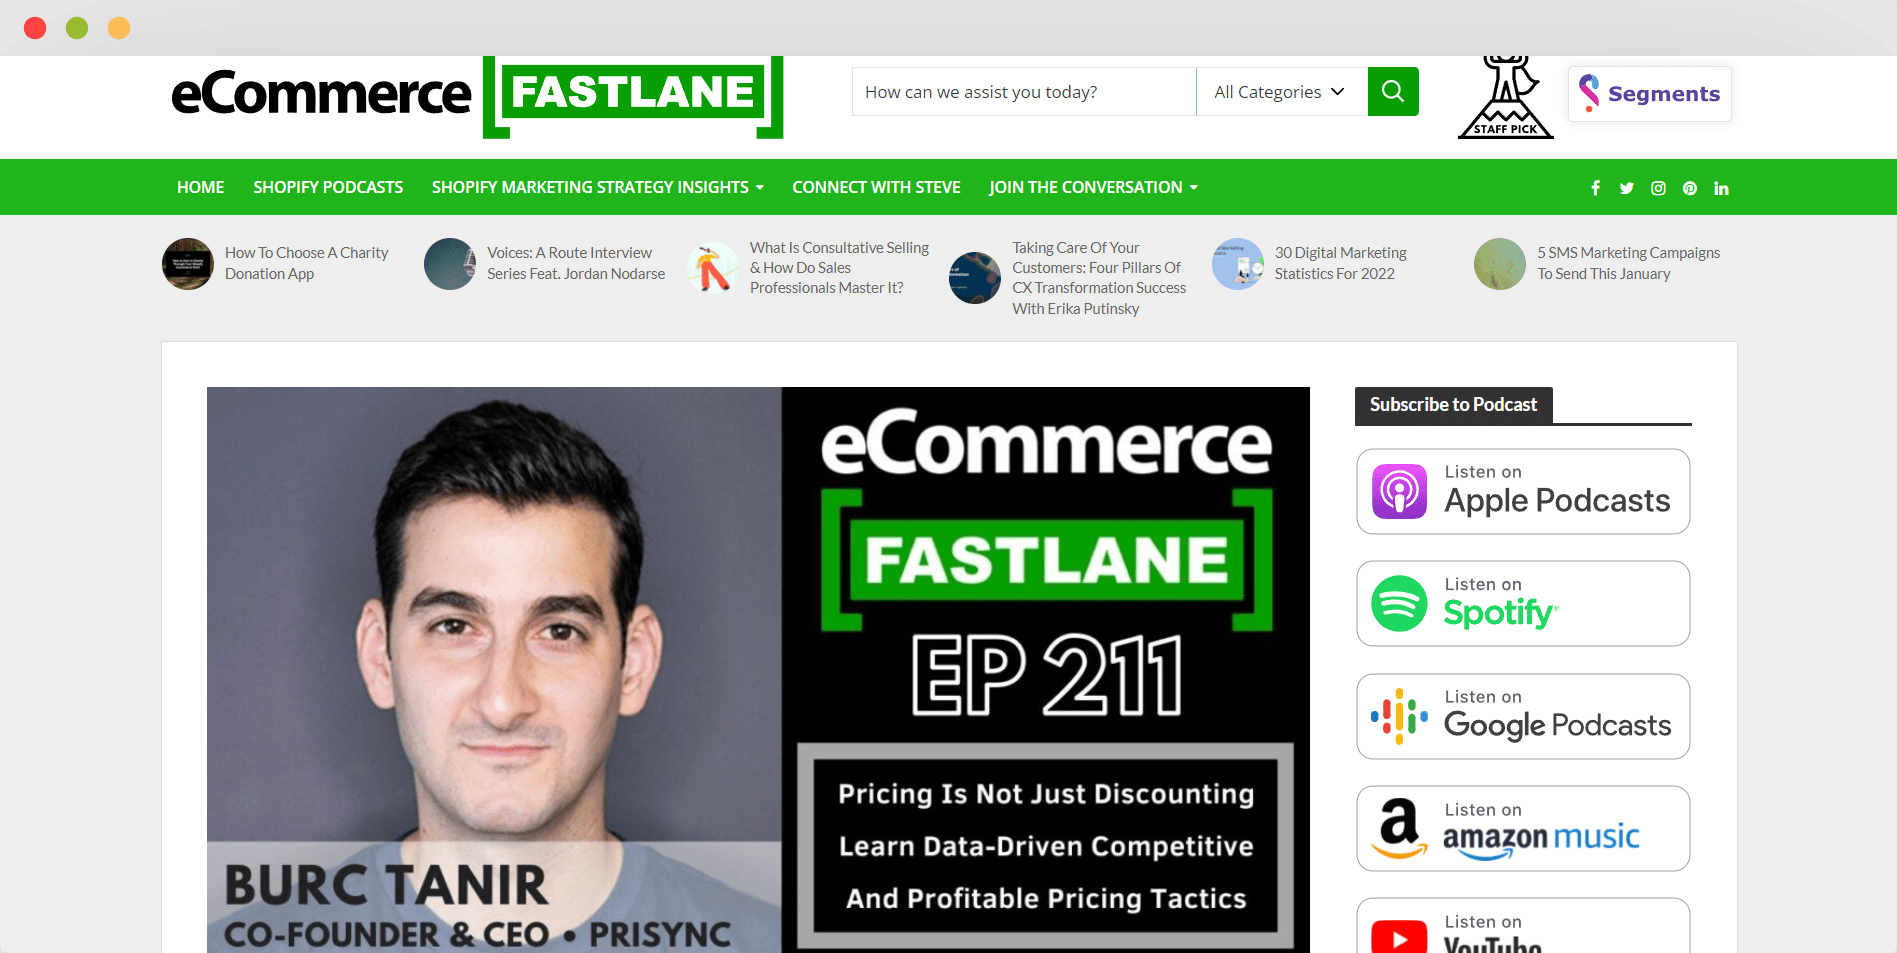 eCommerce Fastlane